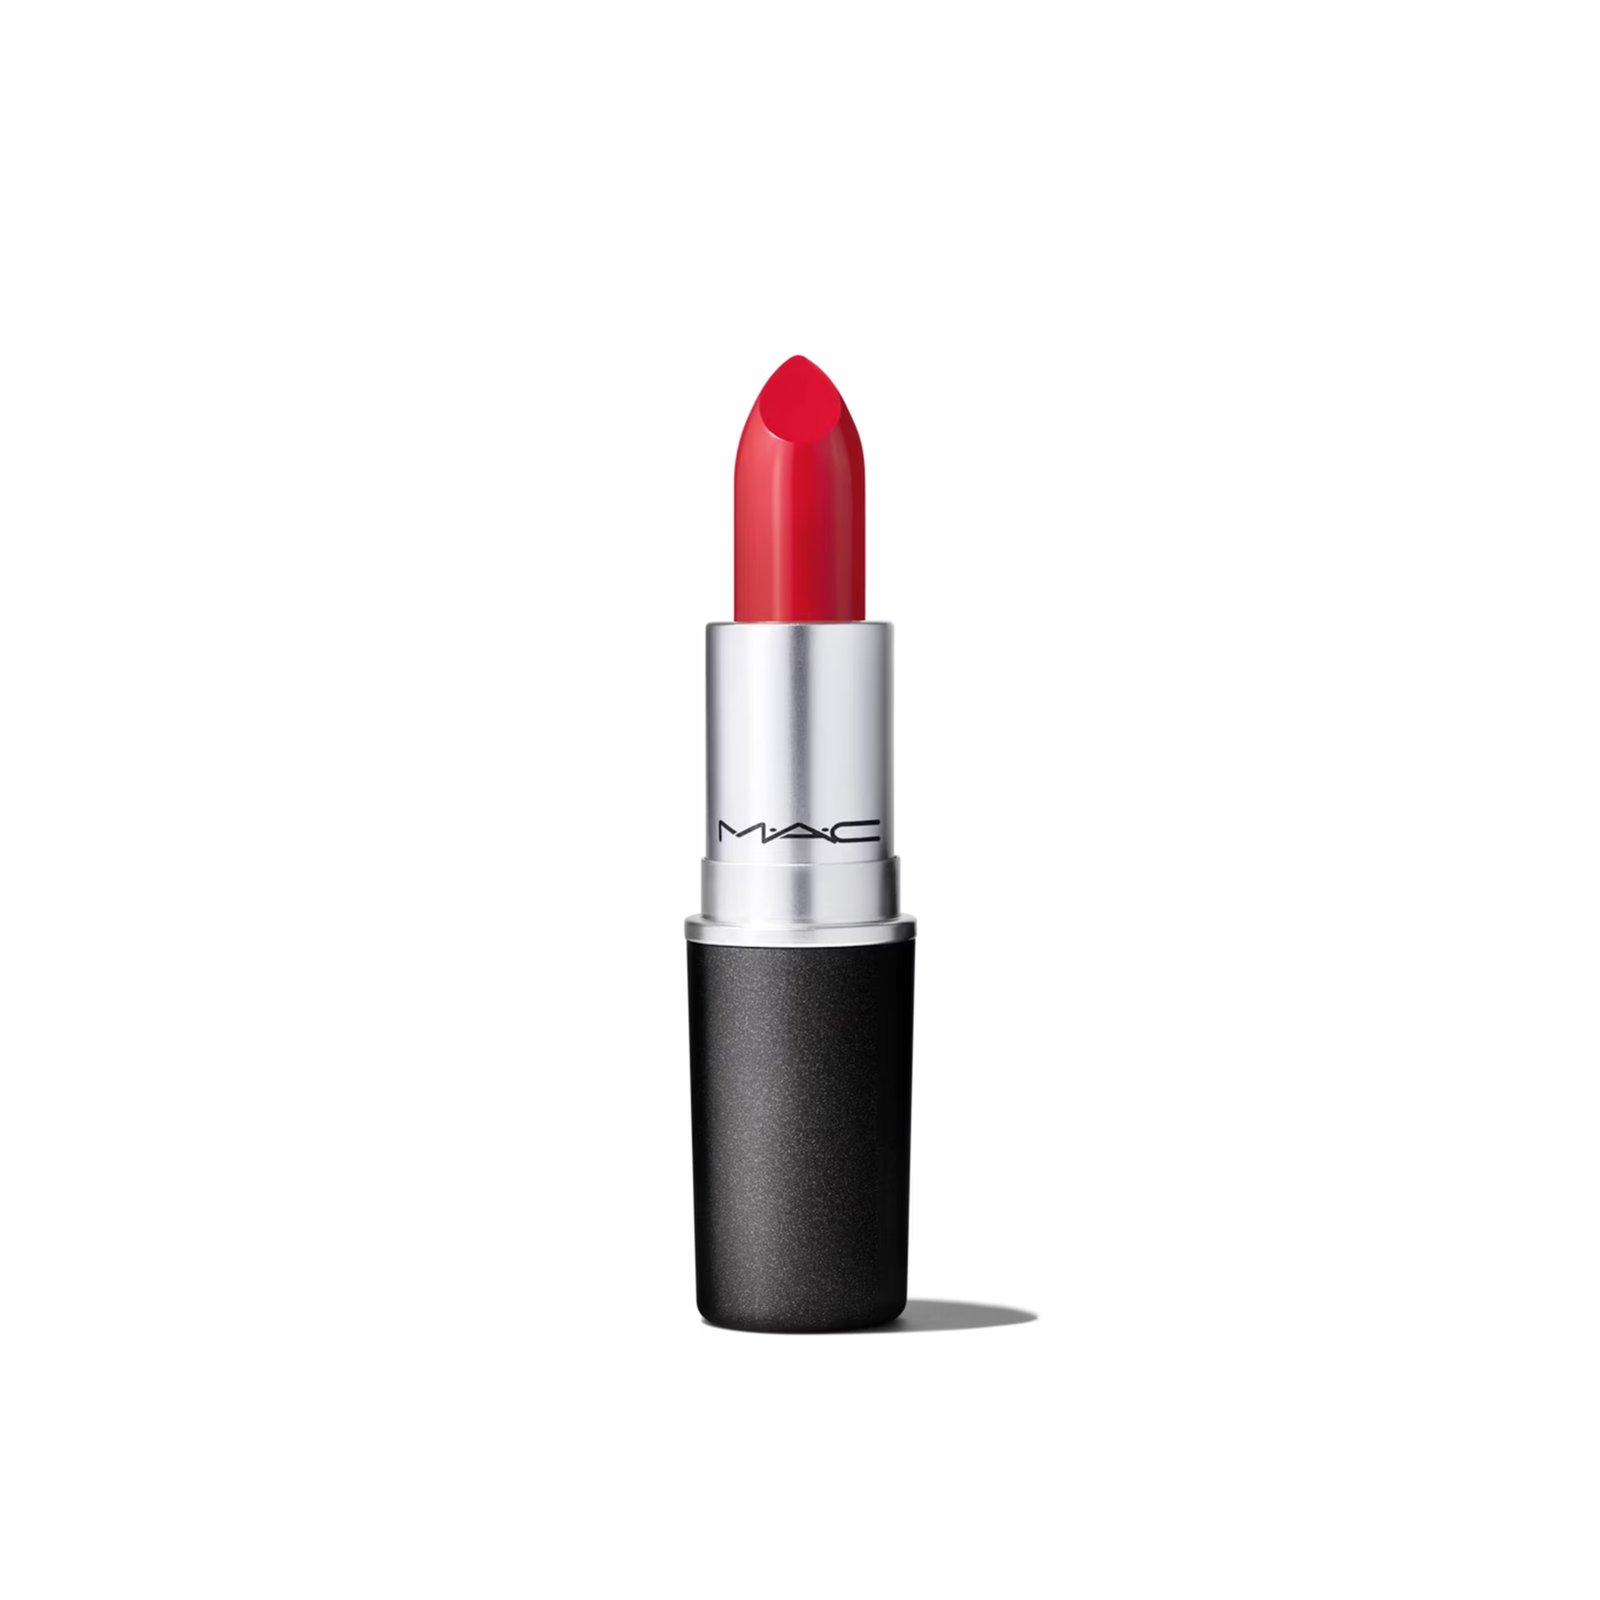 M.A.C Cosmetics Cremesheen Lipstick 201 Brave Red 3g (0.10oz)